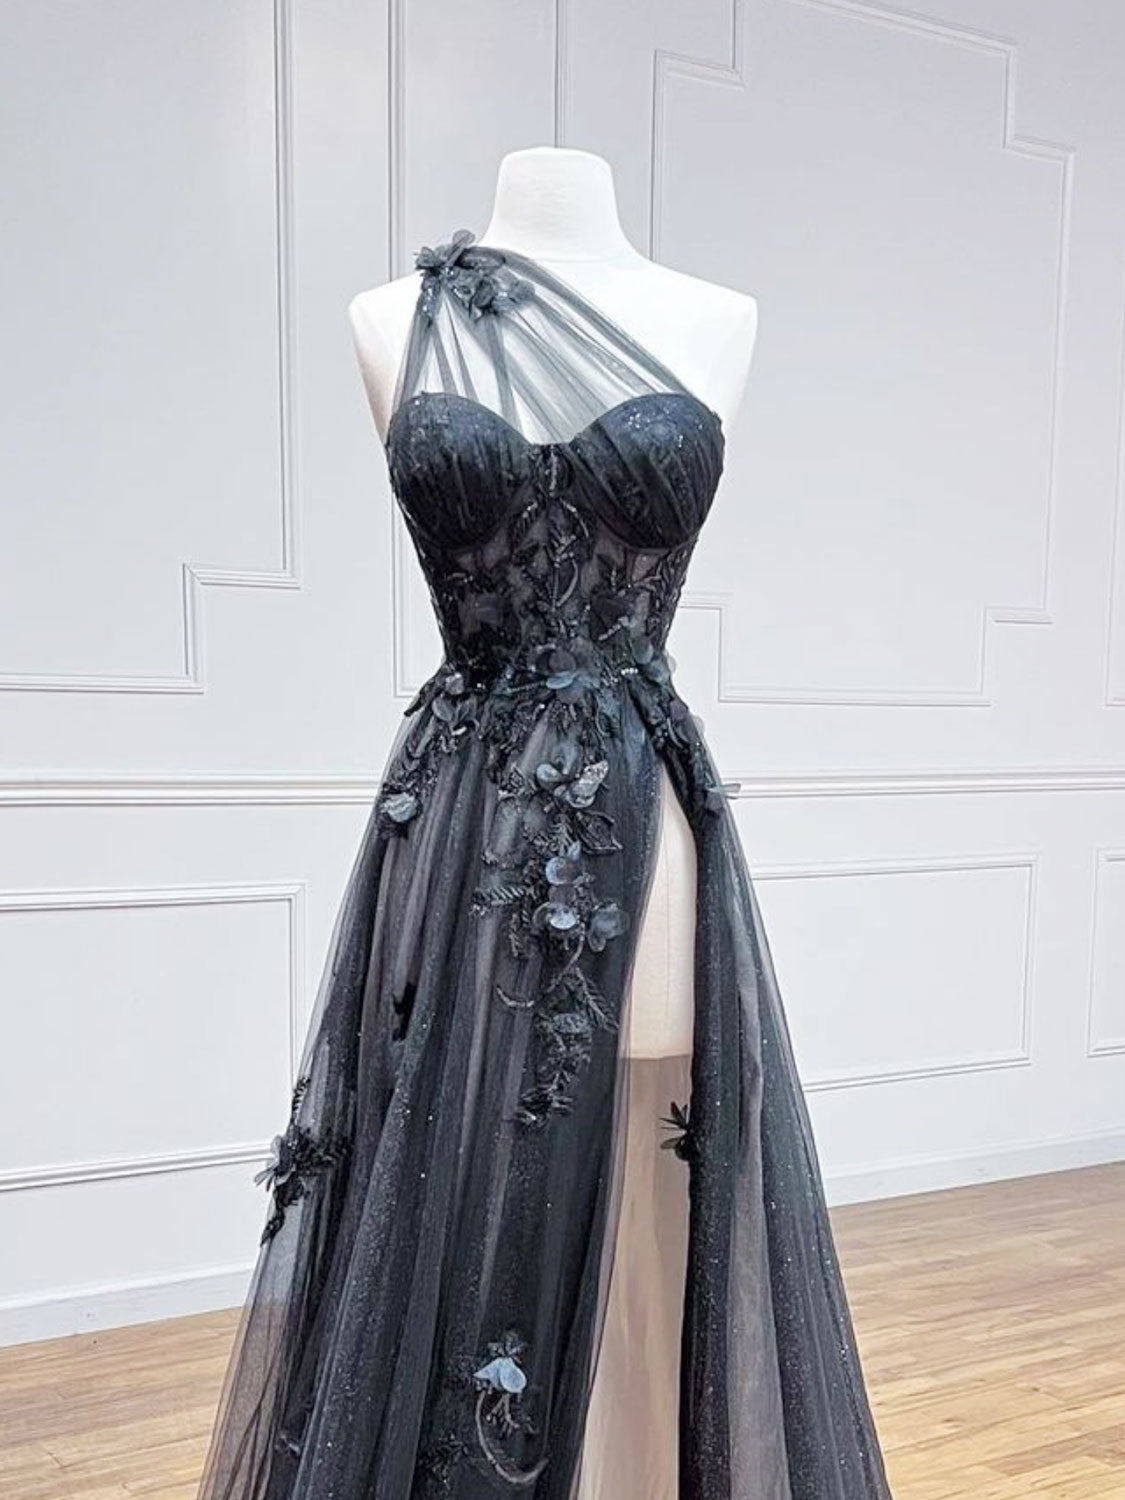 Black One Shoulder Tulle Sheer Lace Boho Prom Dress with High Slit